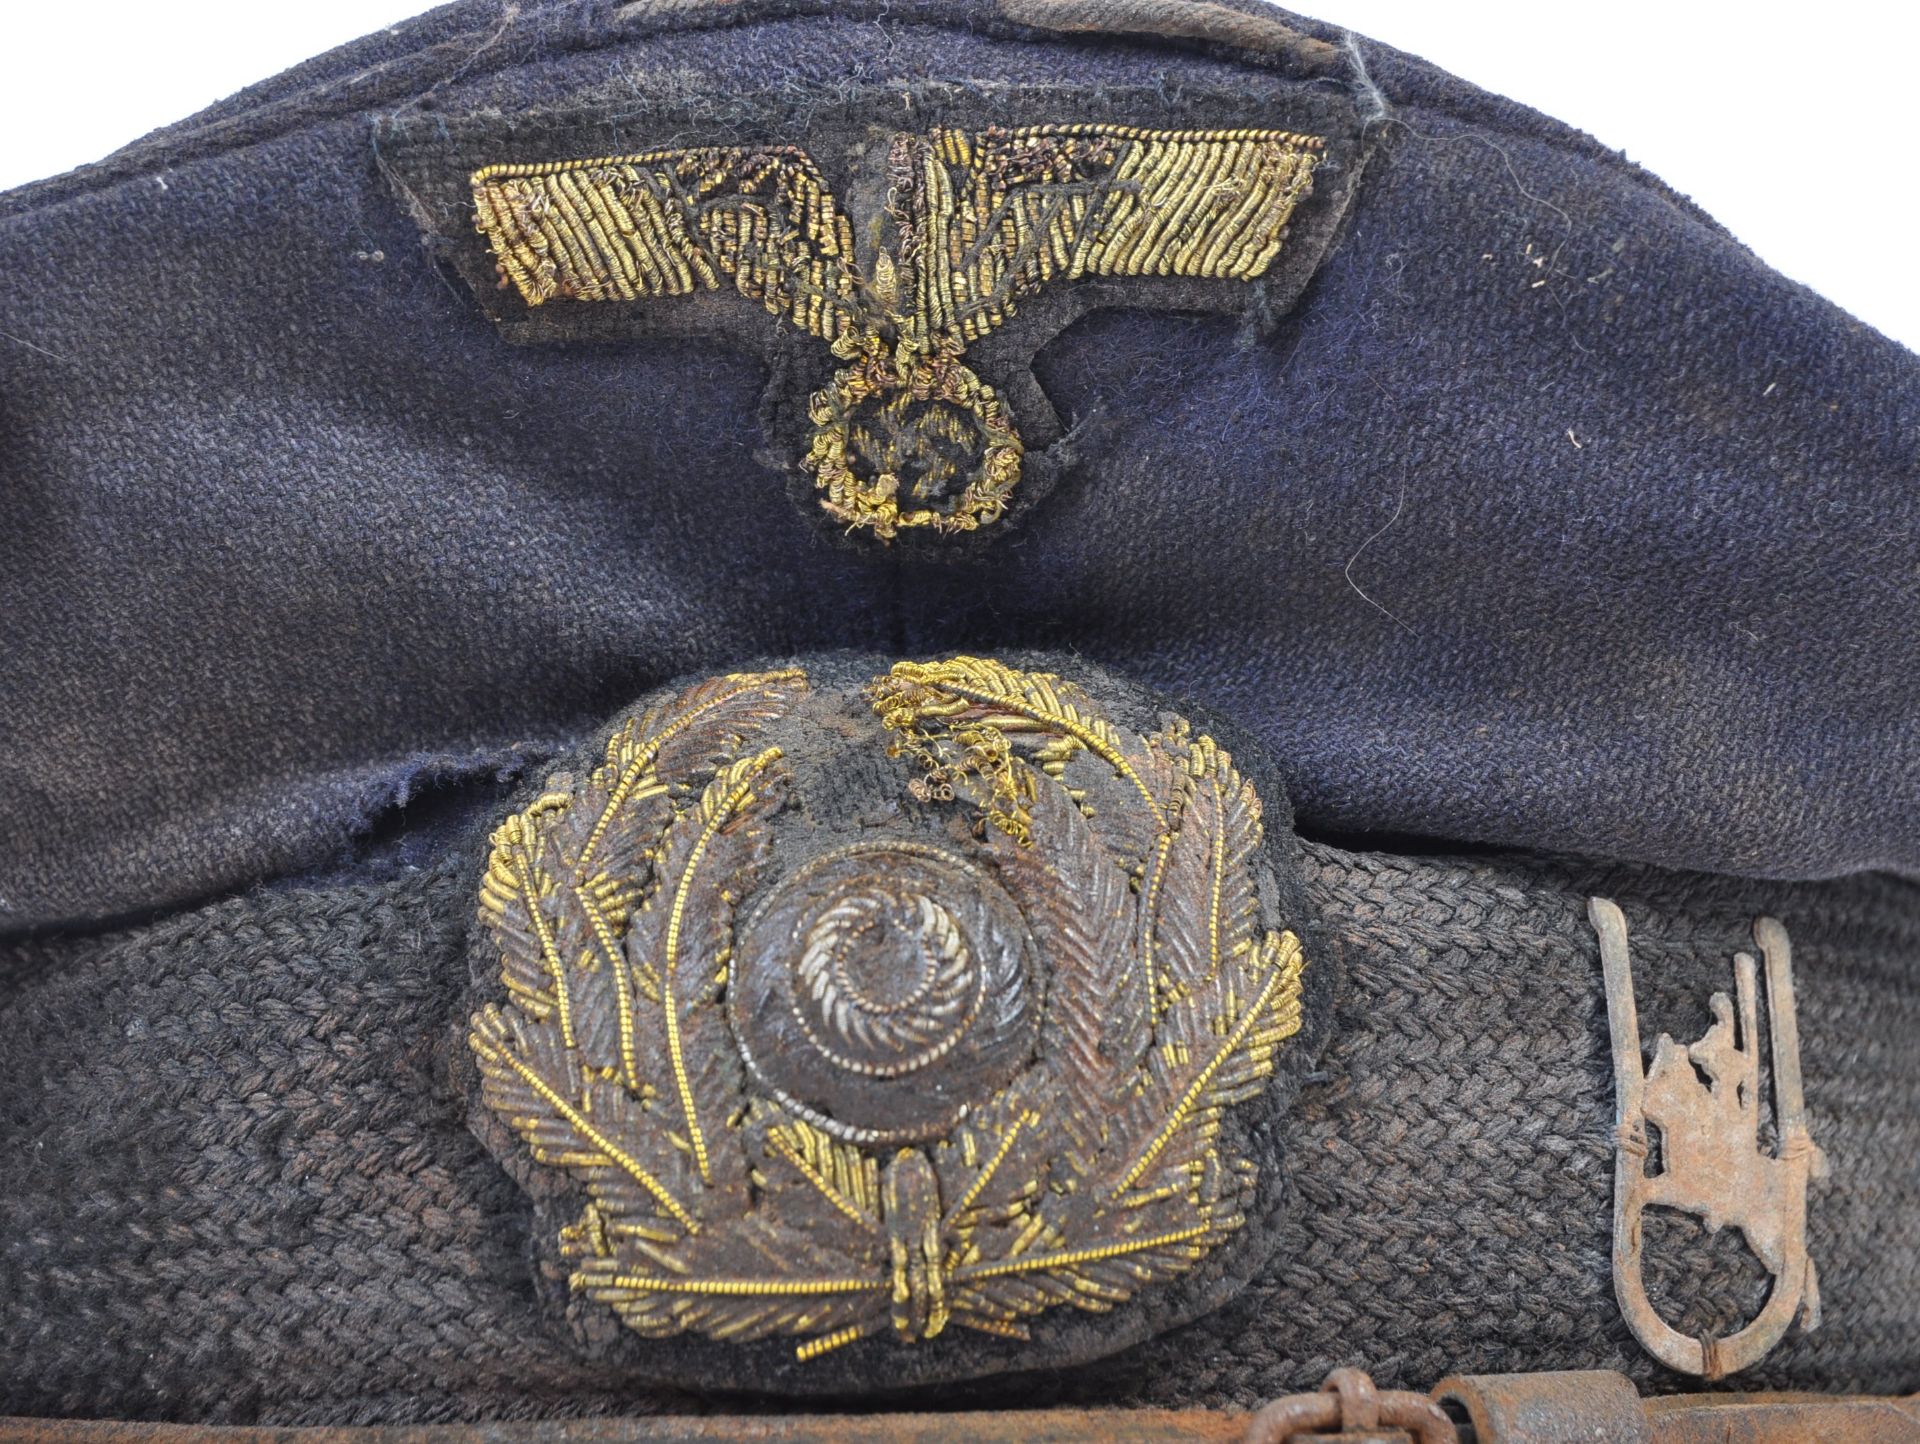 A RARE ORIGINAL WWII SECOND WORLD WAR KRIEGSMARINE OFFICERS CAP - Image 5 of 8